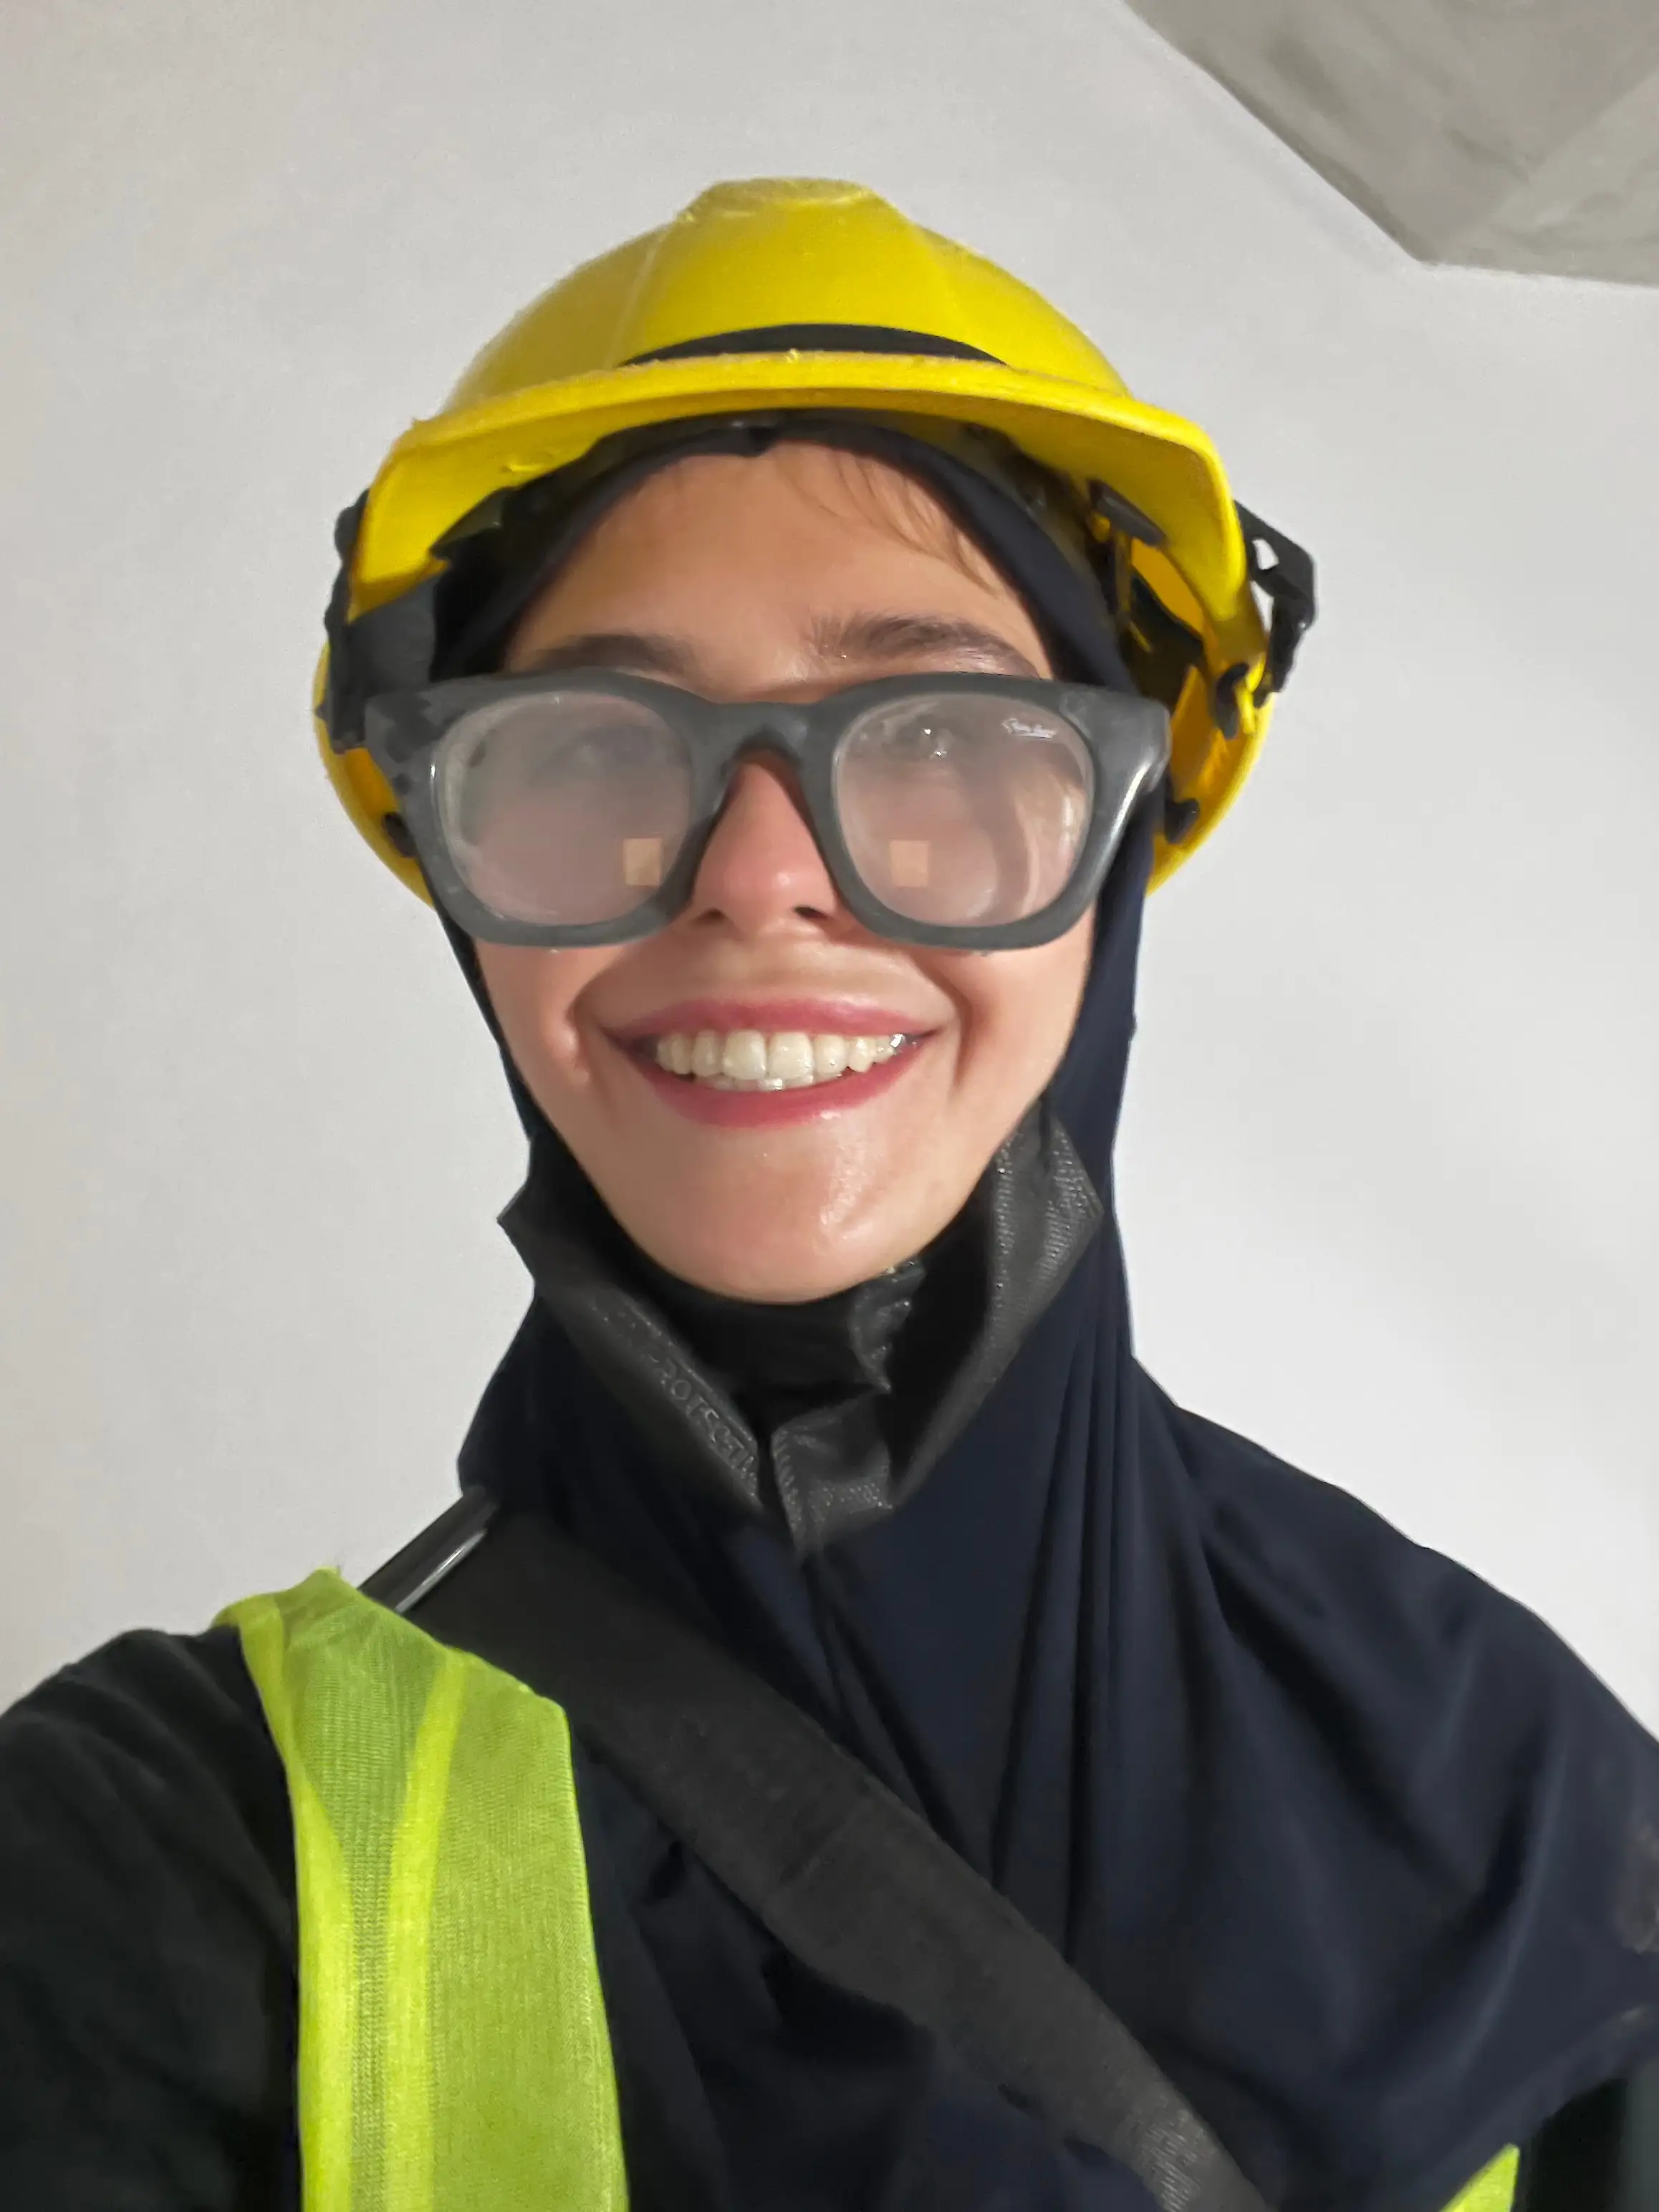 Angela nikolau disguised as construction worker